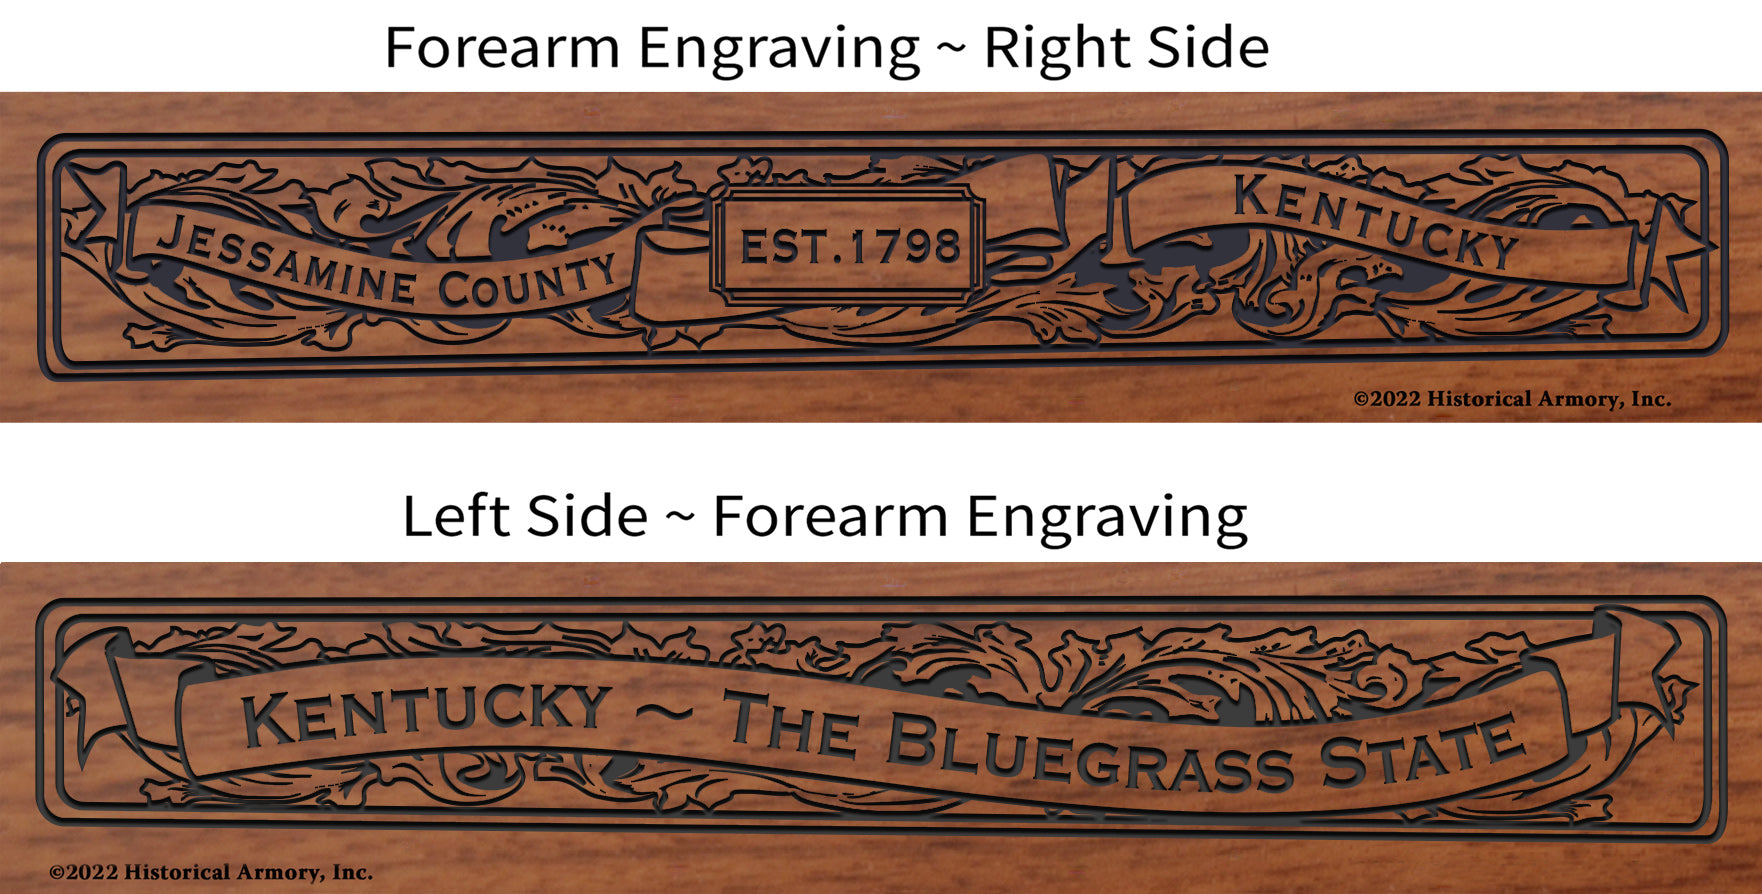 Jessamine County Kentucky Engraved Rifle Forearm Right-Side